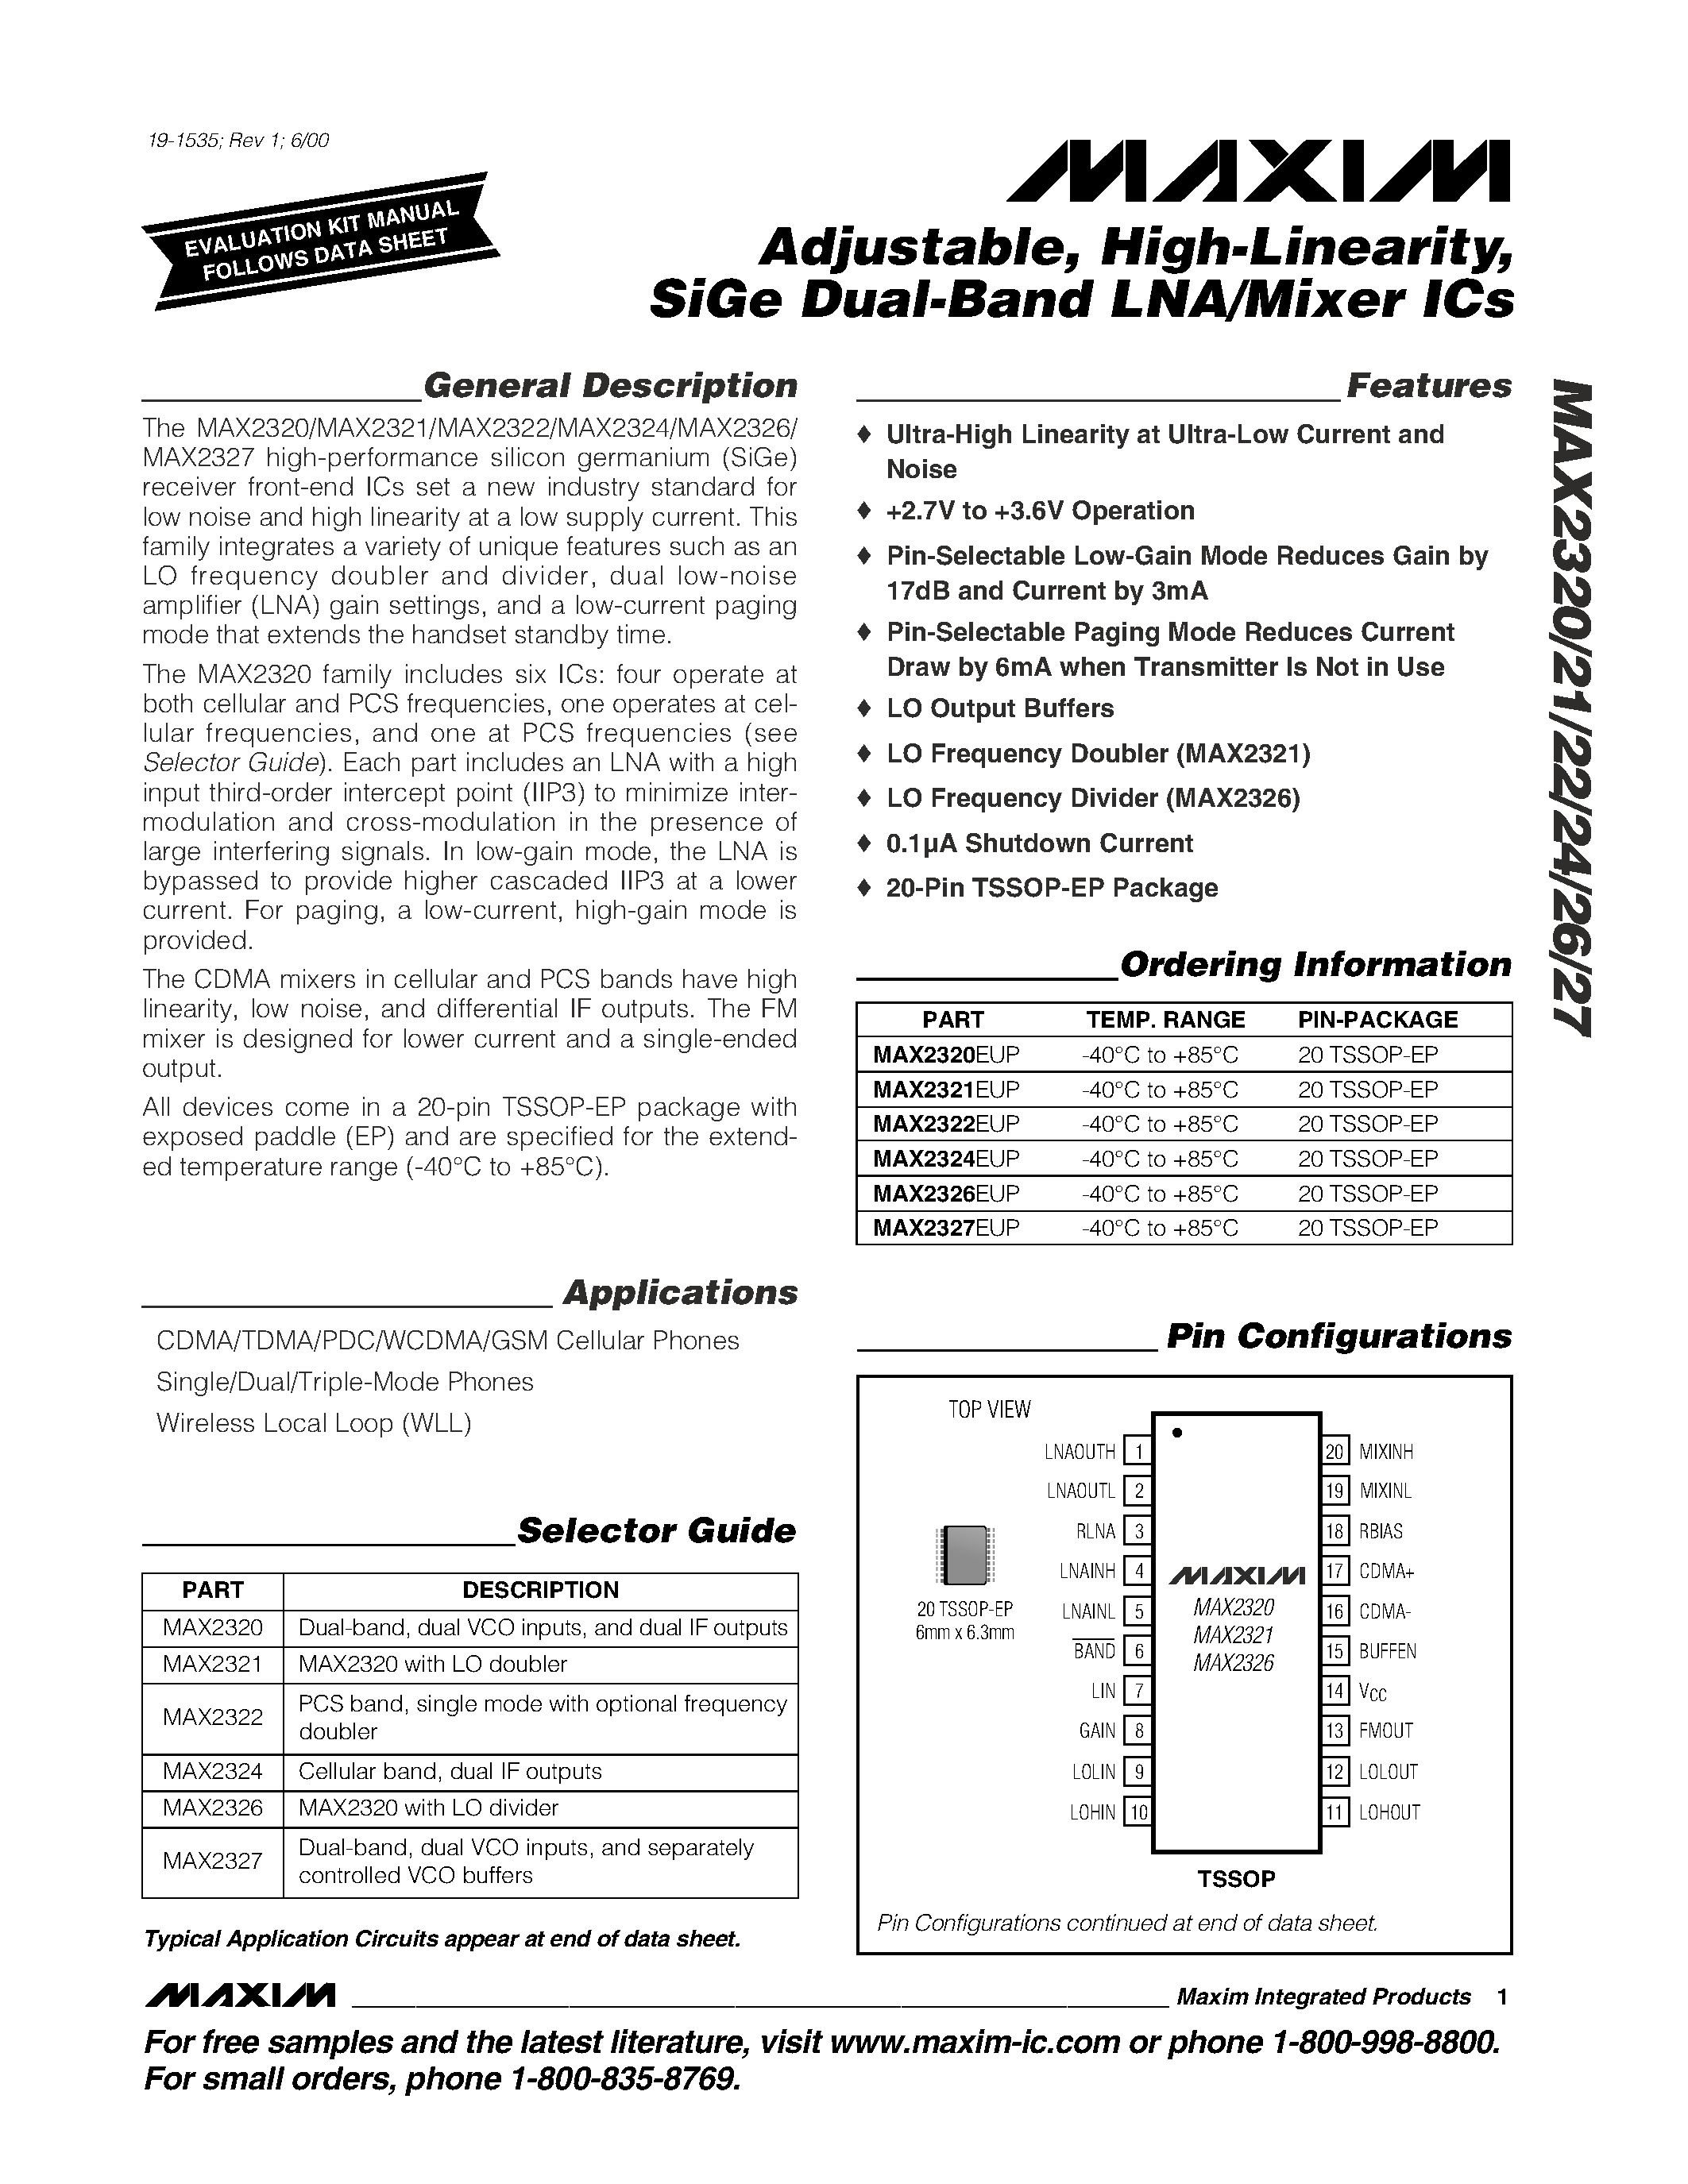 Datasheet MAX2324EUP - Adjustable / High-Linearity / SiGe Dual-Band LNA/Mixer ICs page 1